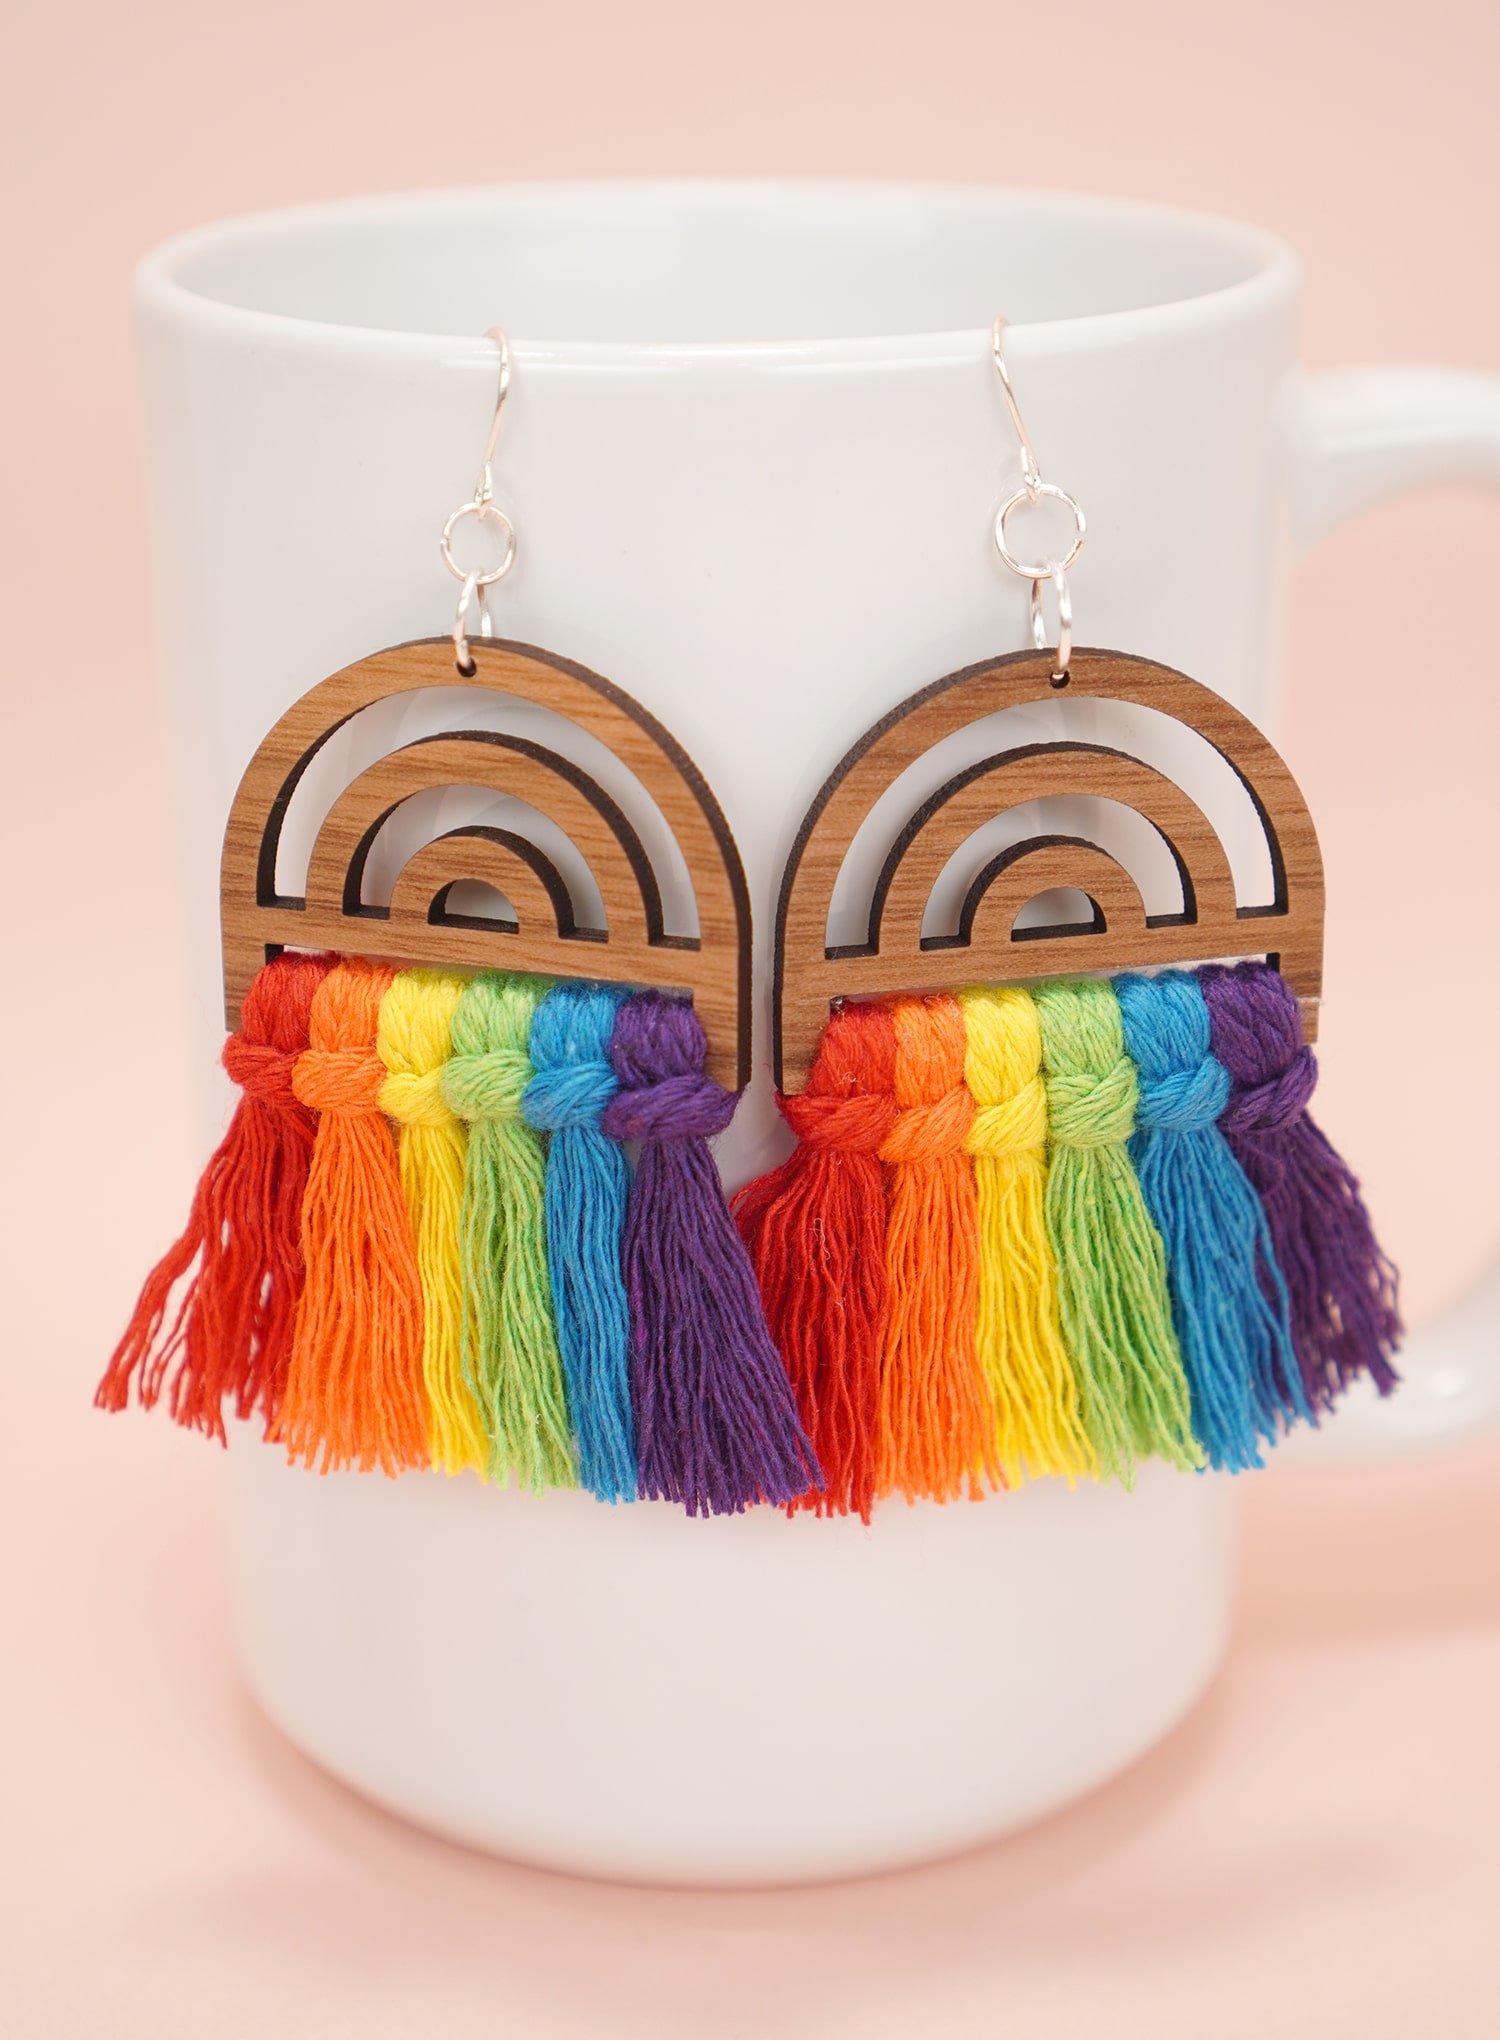 colorful wooden rainbow macrame earrings on white mug on peach background